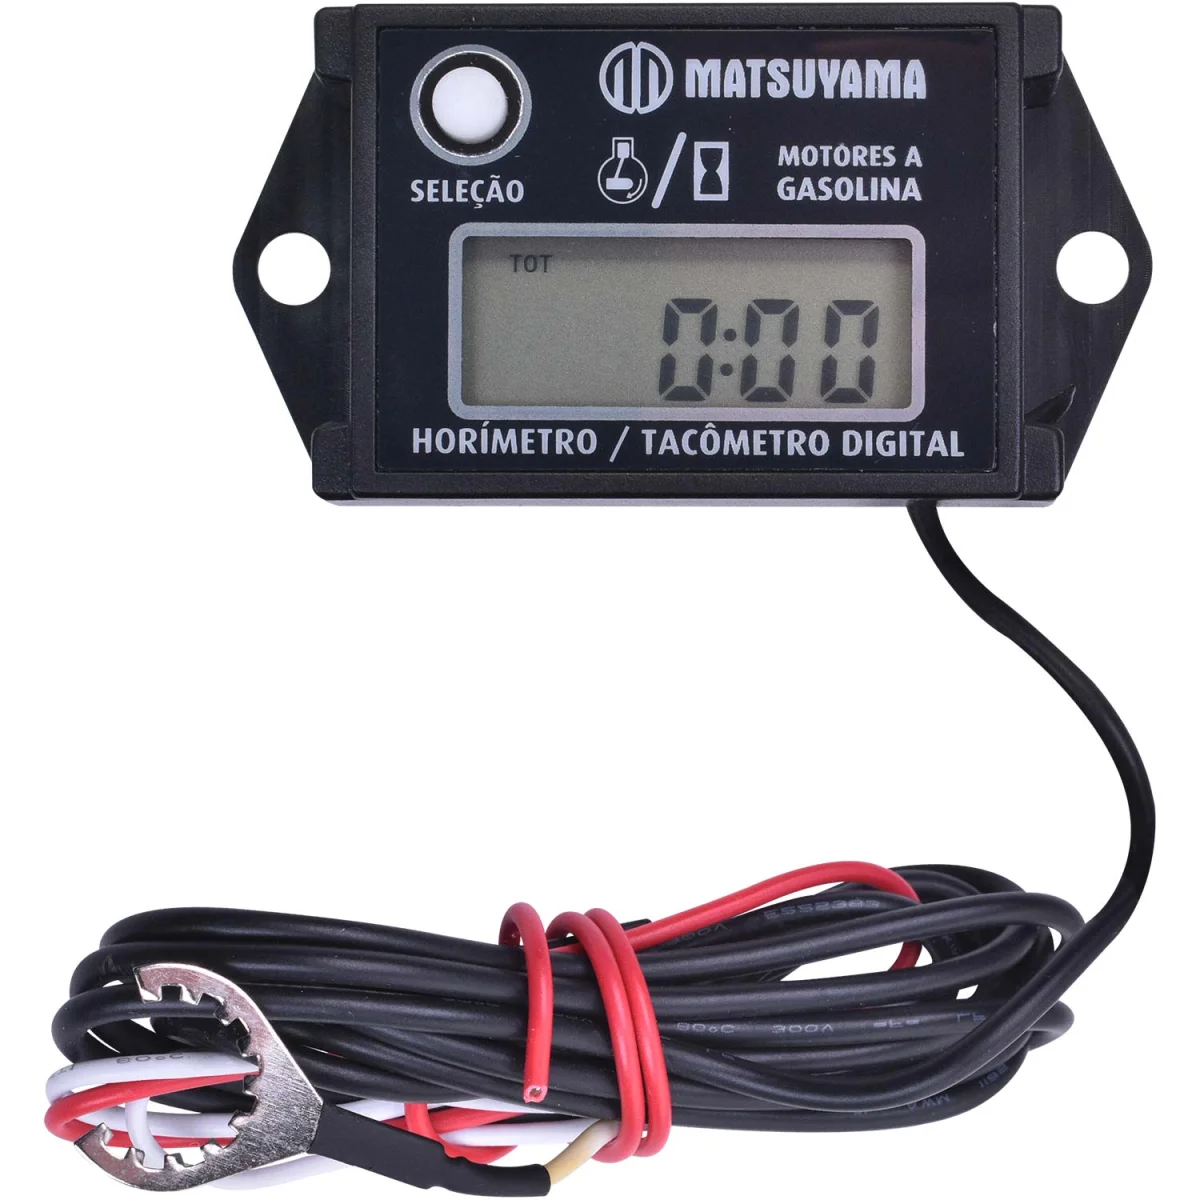 Tacômetro / Horímetro Digital P/ Motores Gasolina Matsuyama